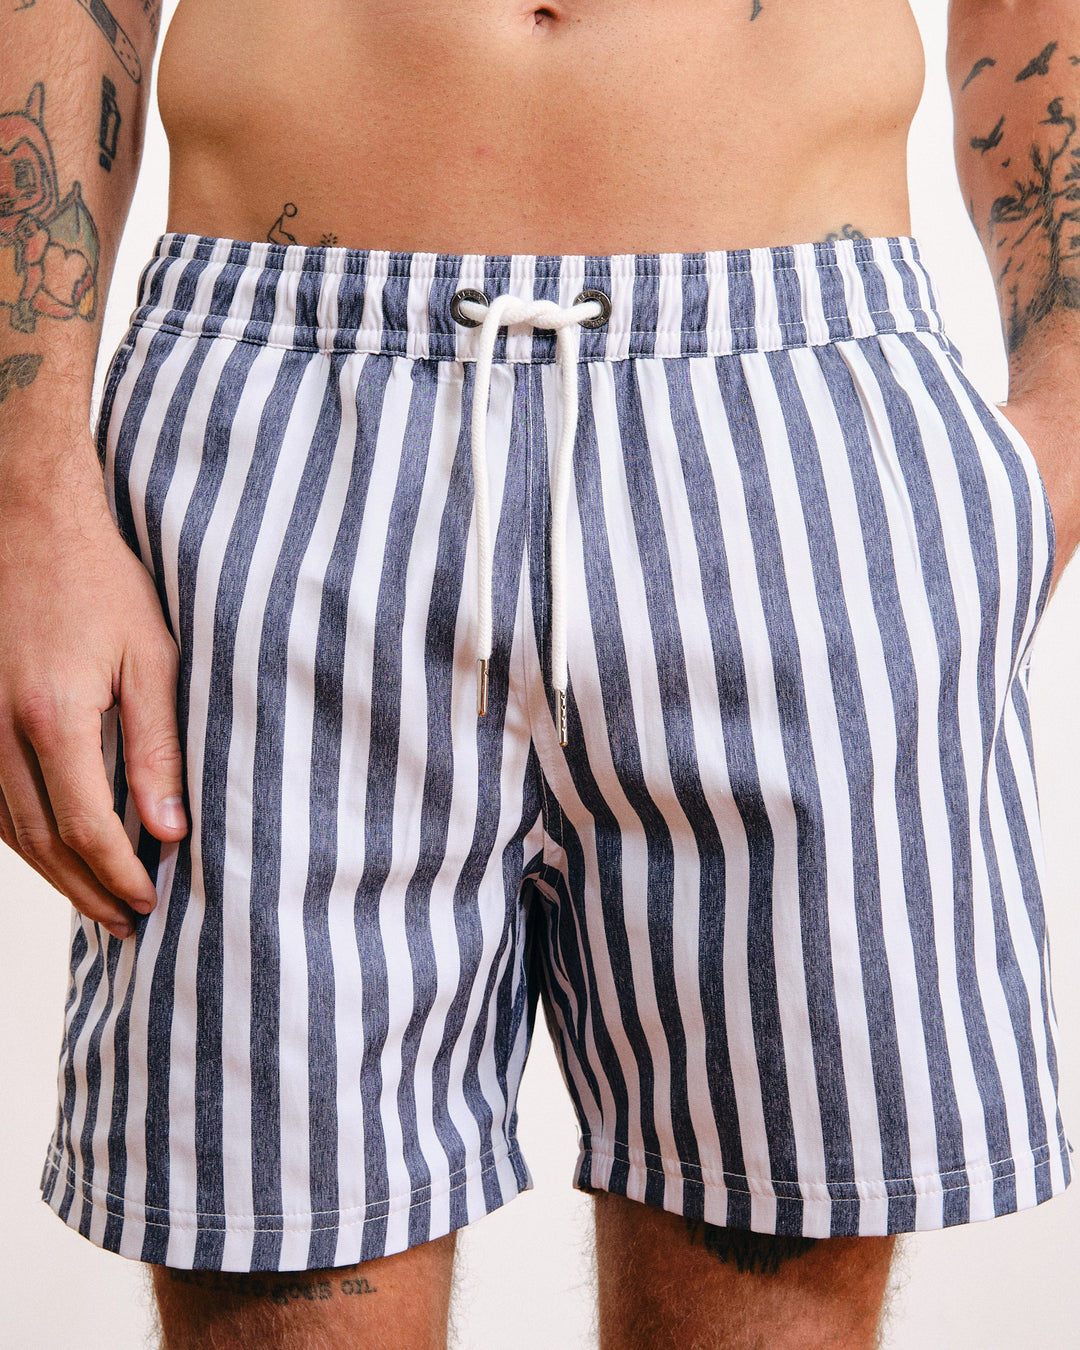 Gorlero 4-Inch Nylon Swim Shorts Blue Stripes